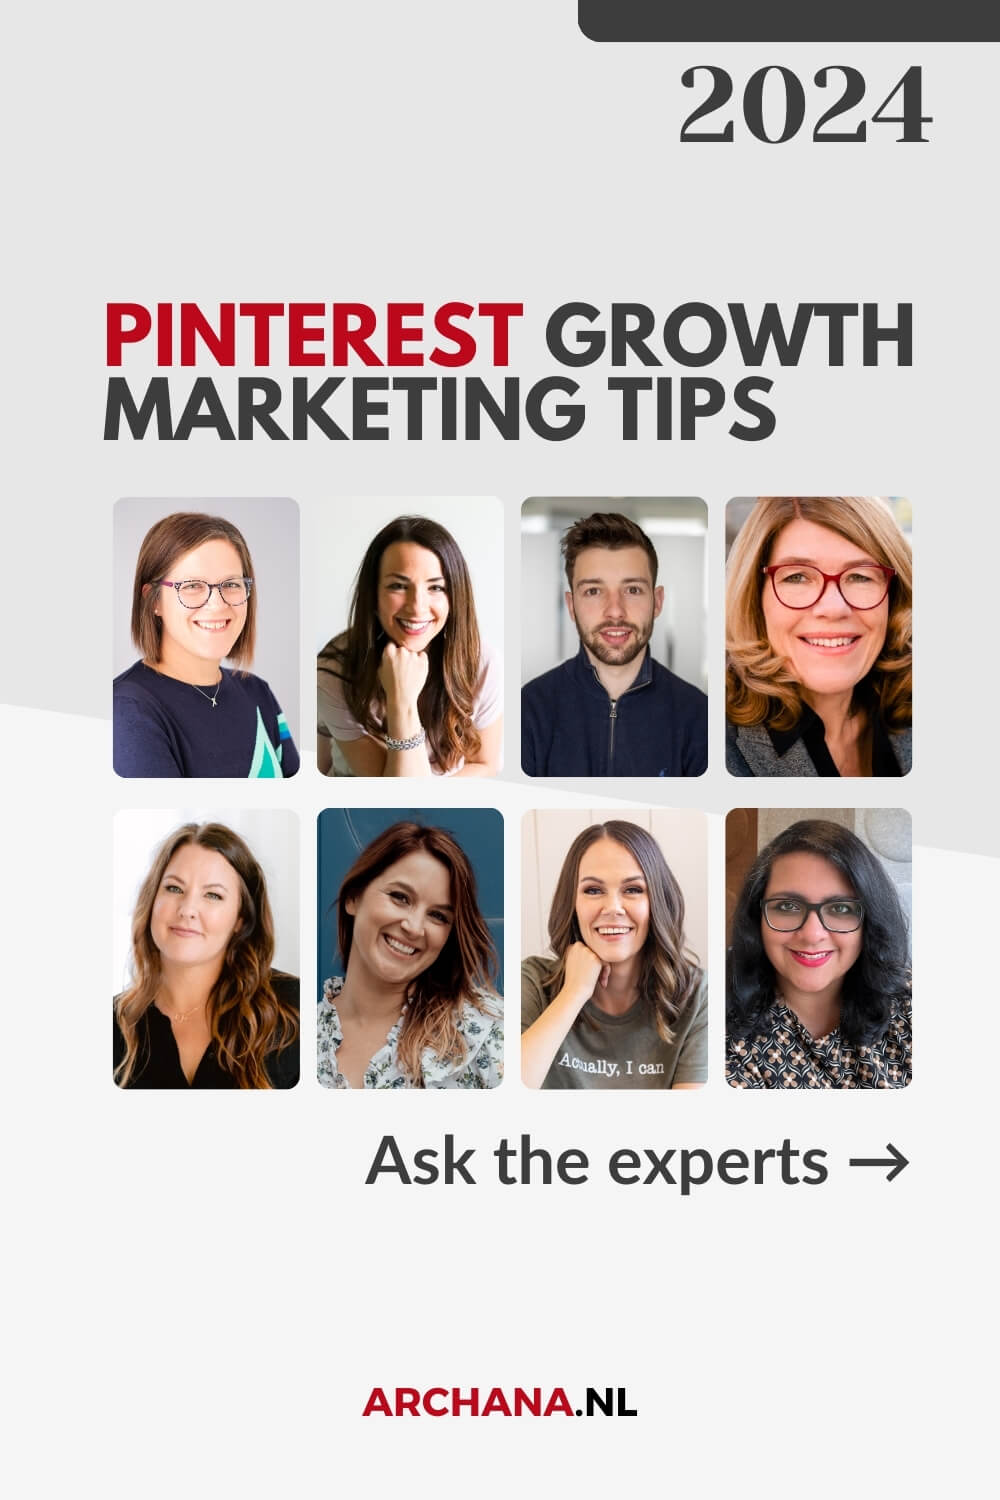 Pinterest growth marketing tips 2024 - Ask the Pinterest experts - ARCHANA.NL